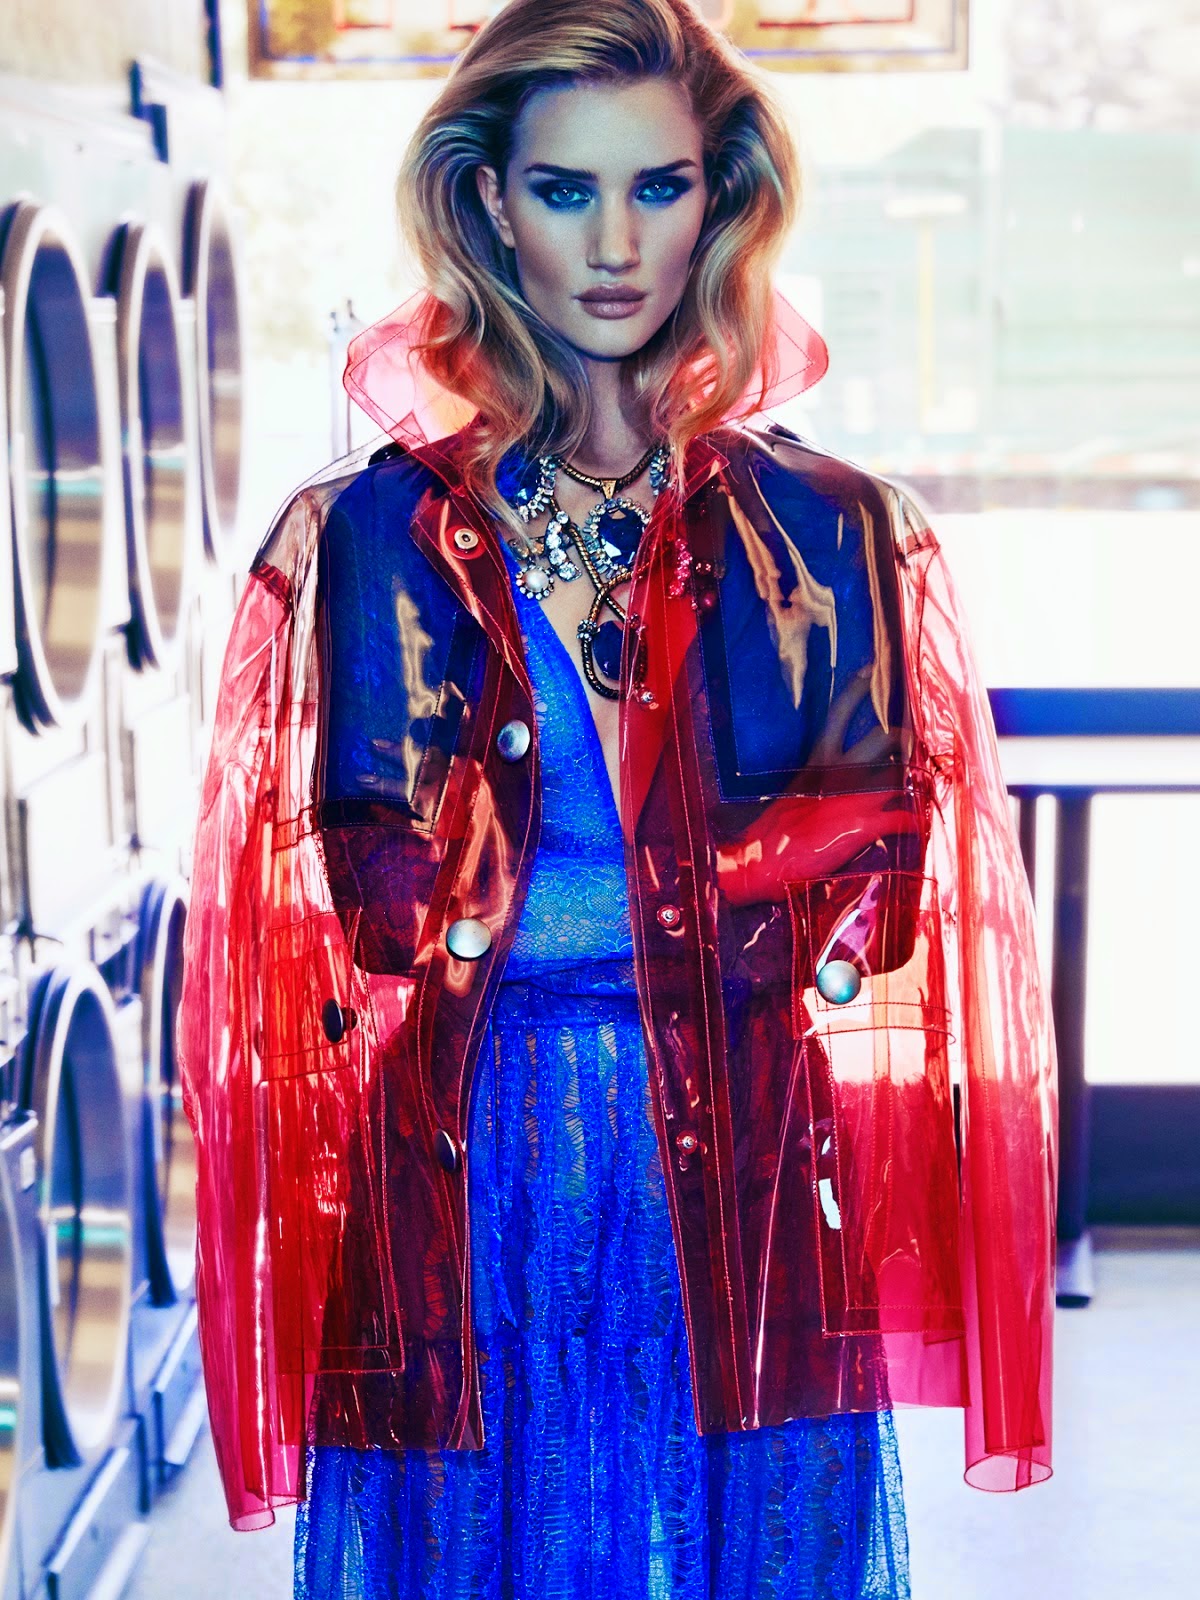 British supermodel Rosie Huntington-Whiteley By James Macari For Vogue Mexico November 2014